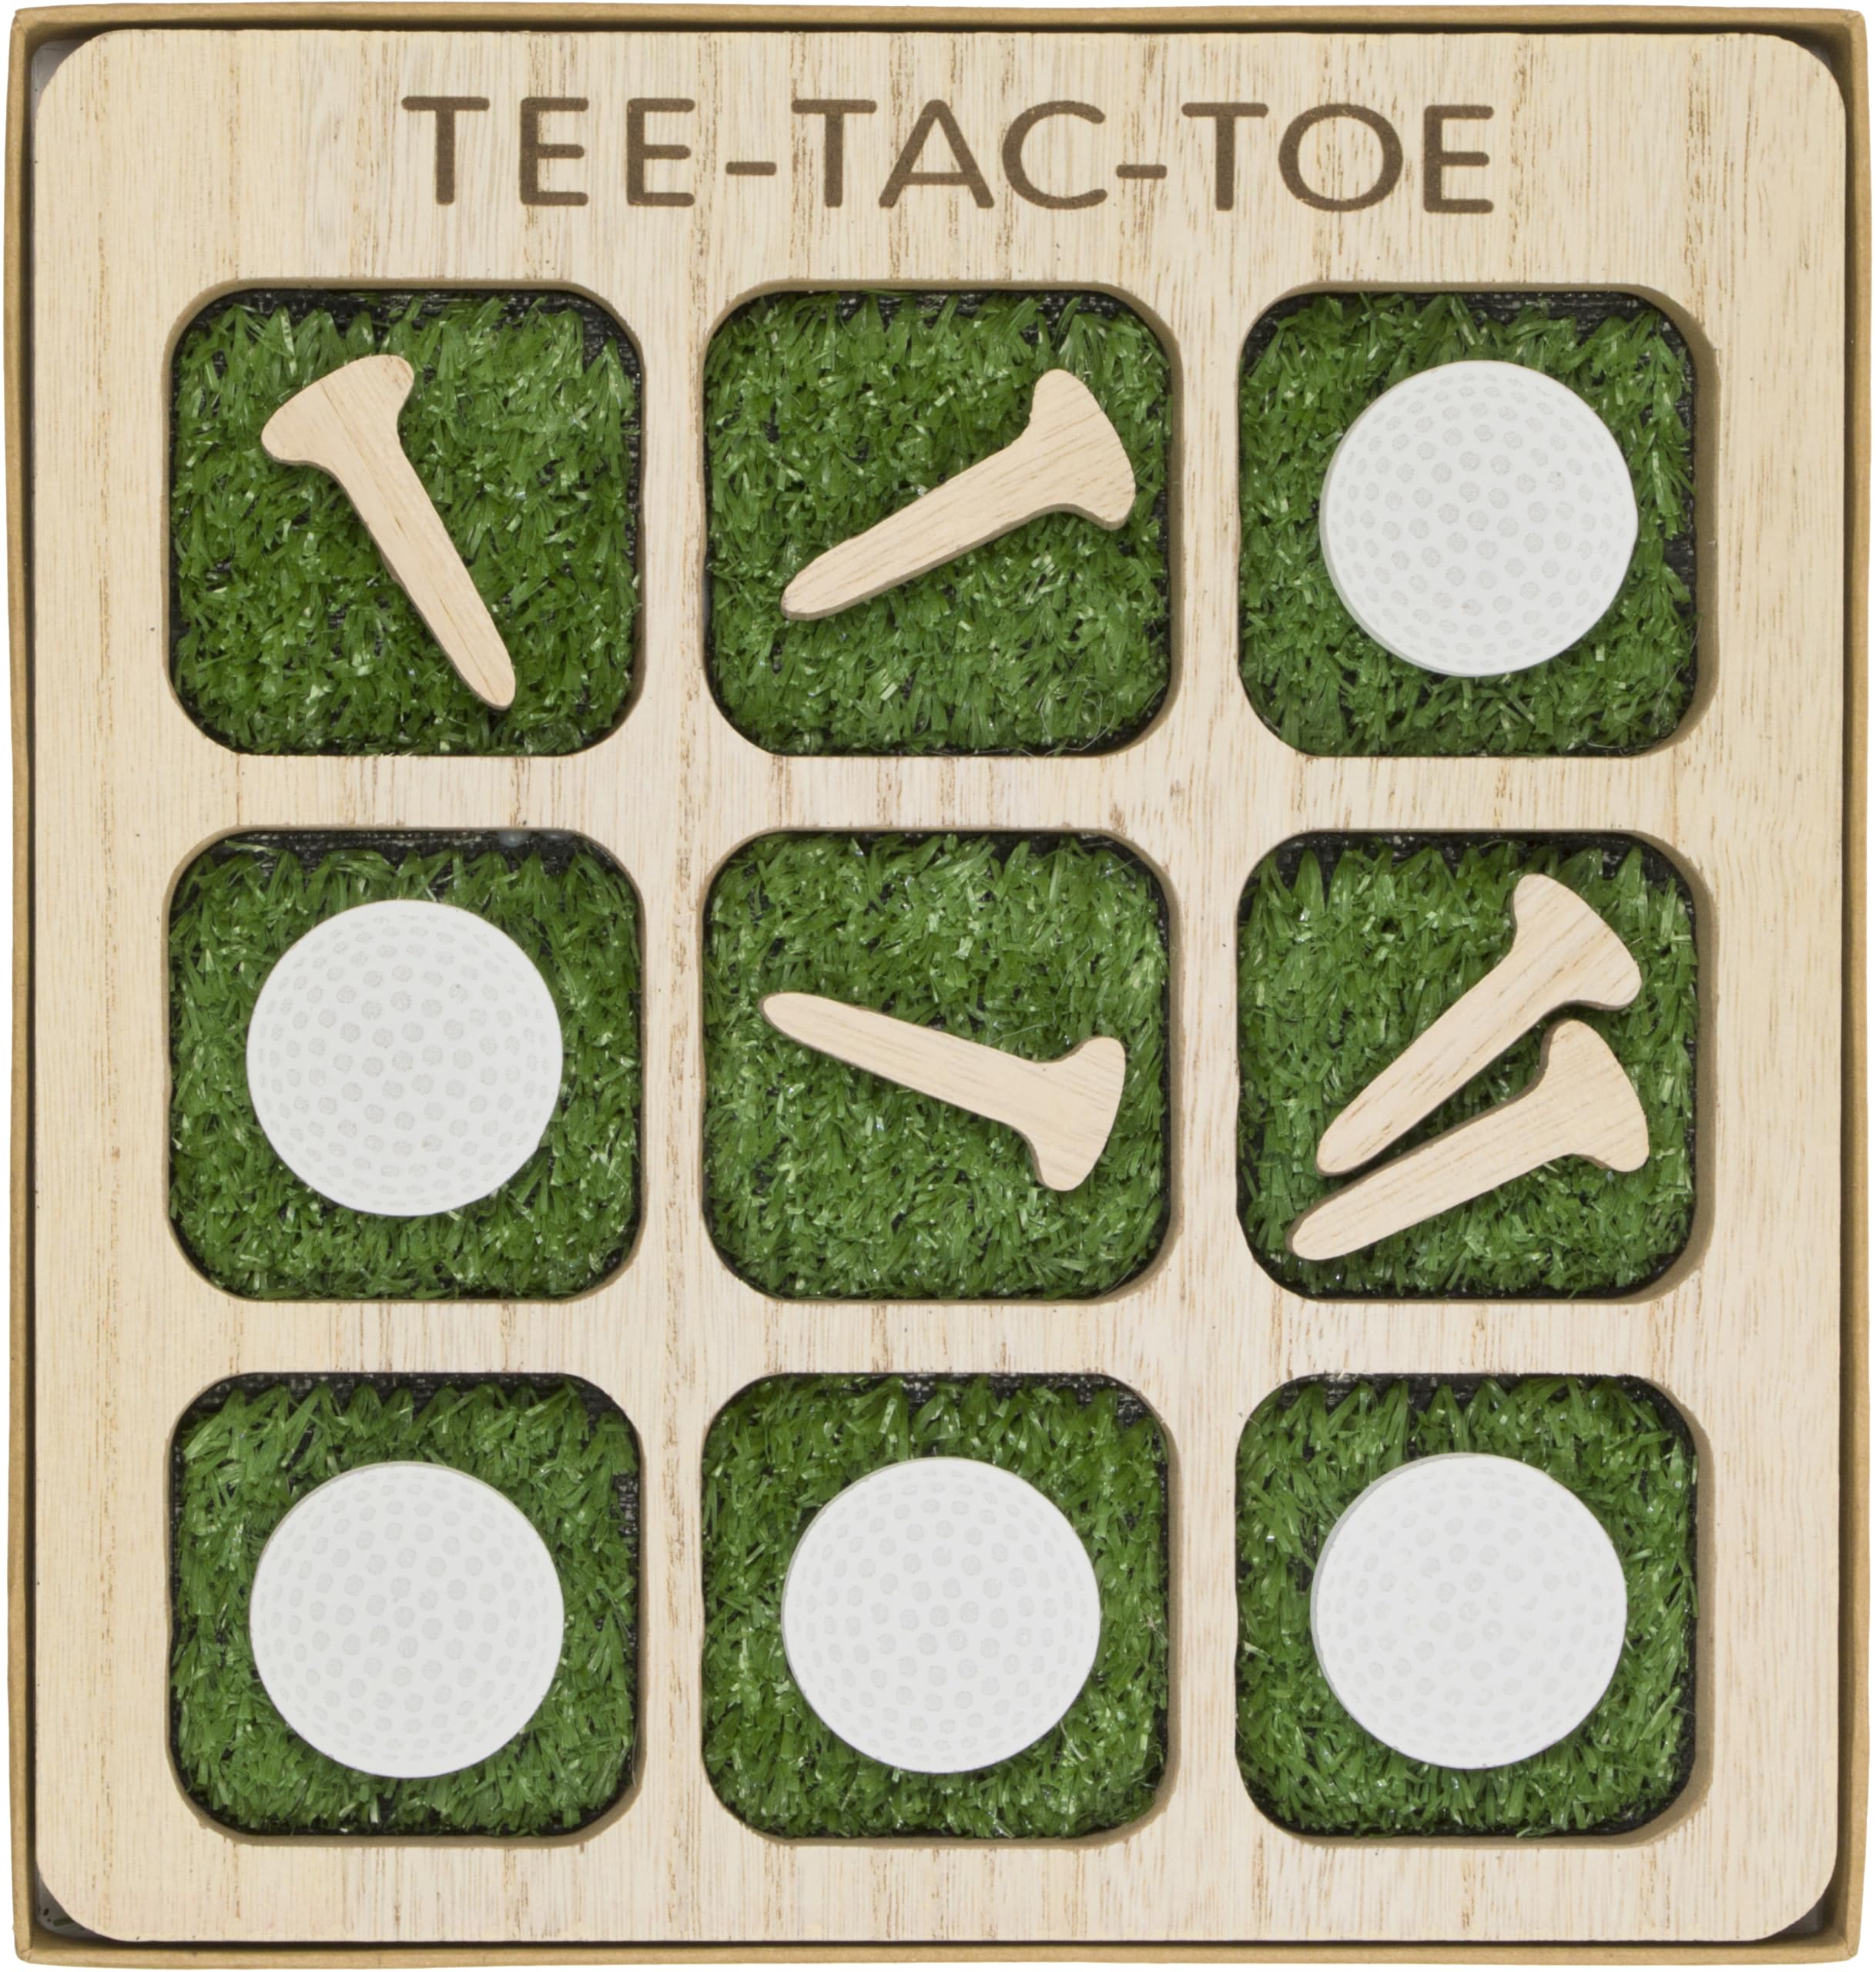 Eccolo Tee Tac Toe Table Game Product Image